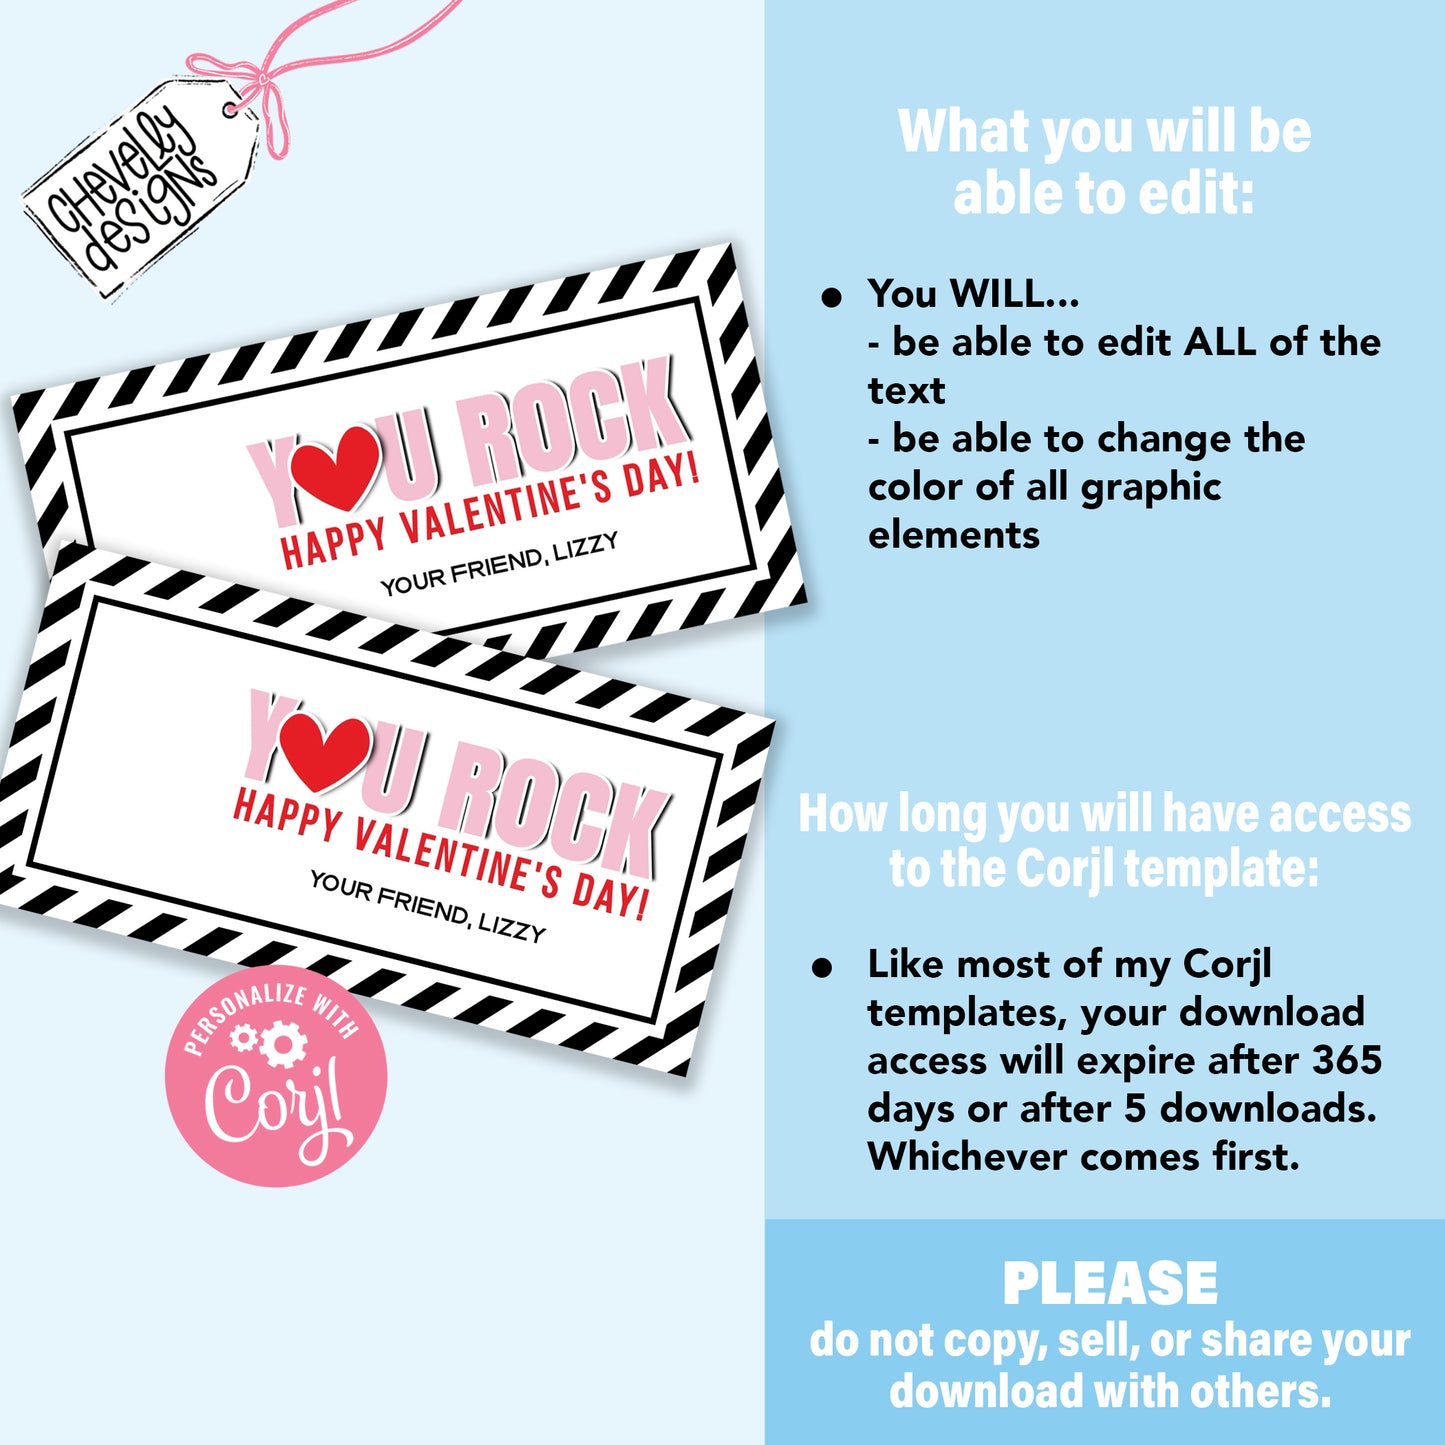 EDITABLE - You Rock Valentine - Student Valentine Cards - Printable Digital File